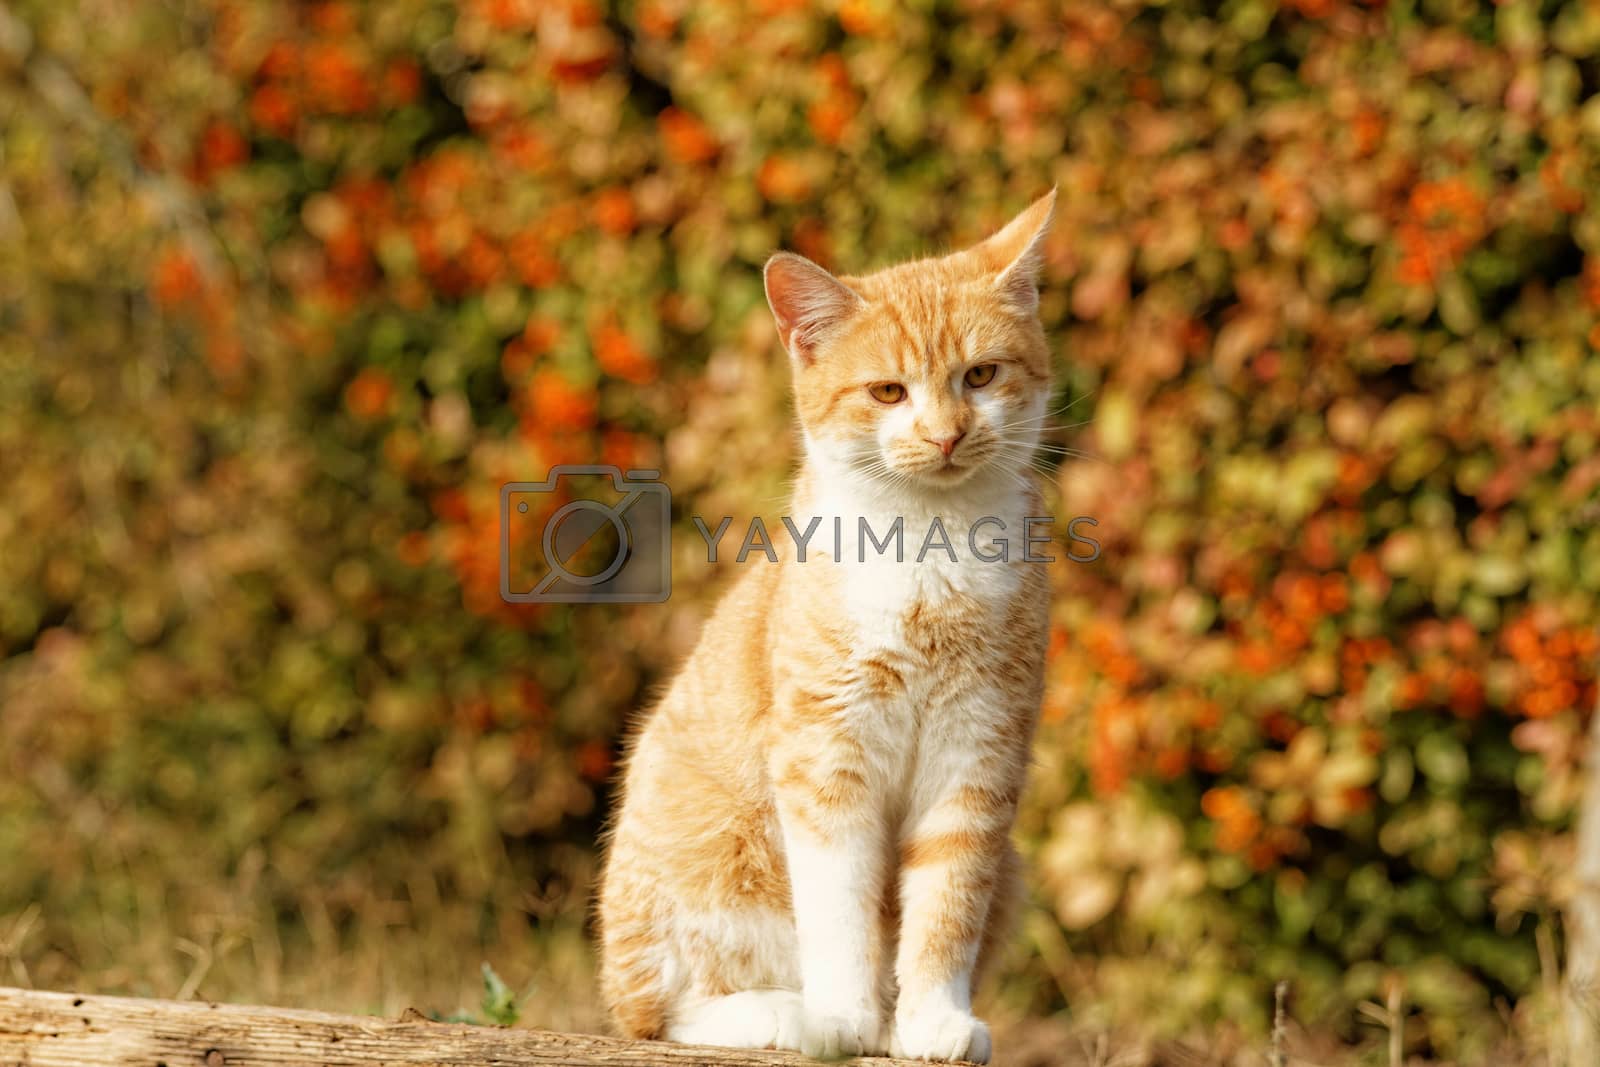 Royalty free image of Orange cat by Nneirda